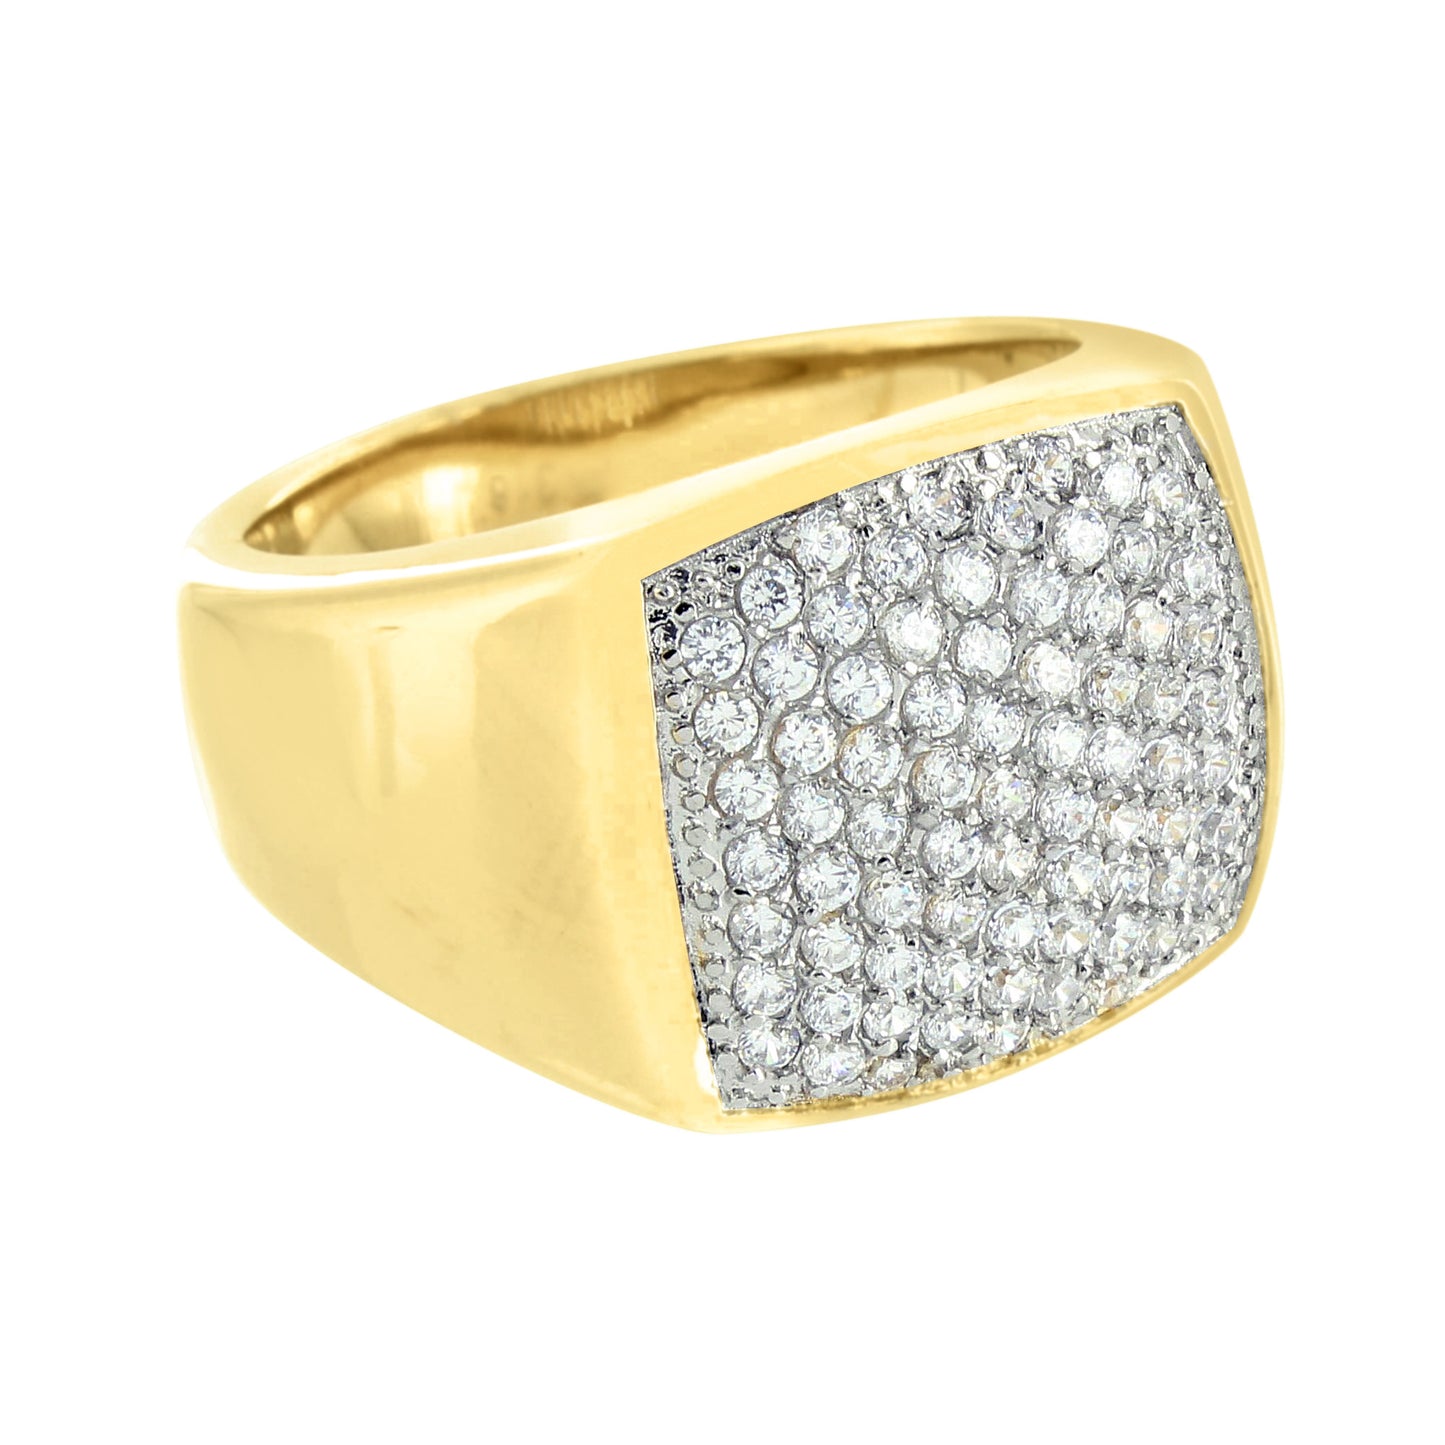 Wedding Engagement Rings Mens Simulated Diamonds Gold On Stainless Steel Elegant